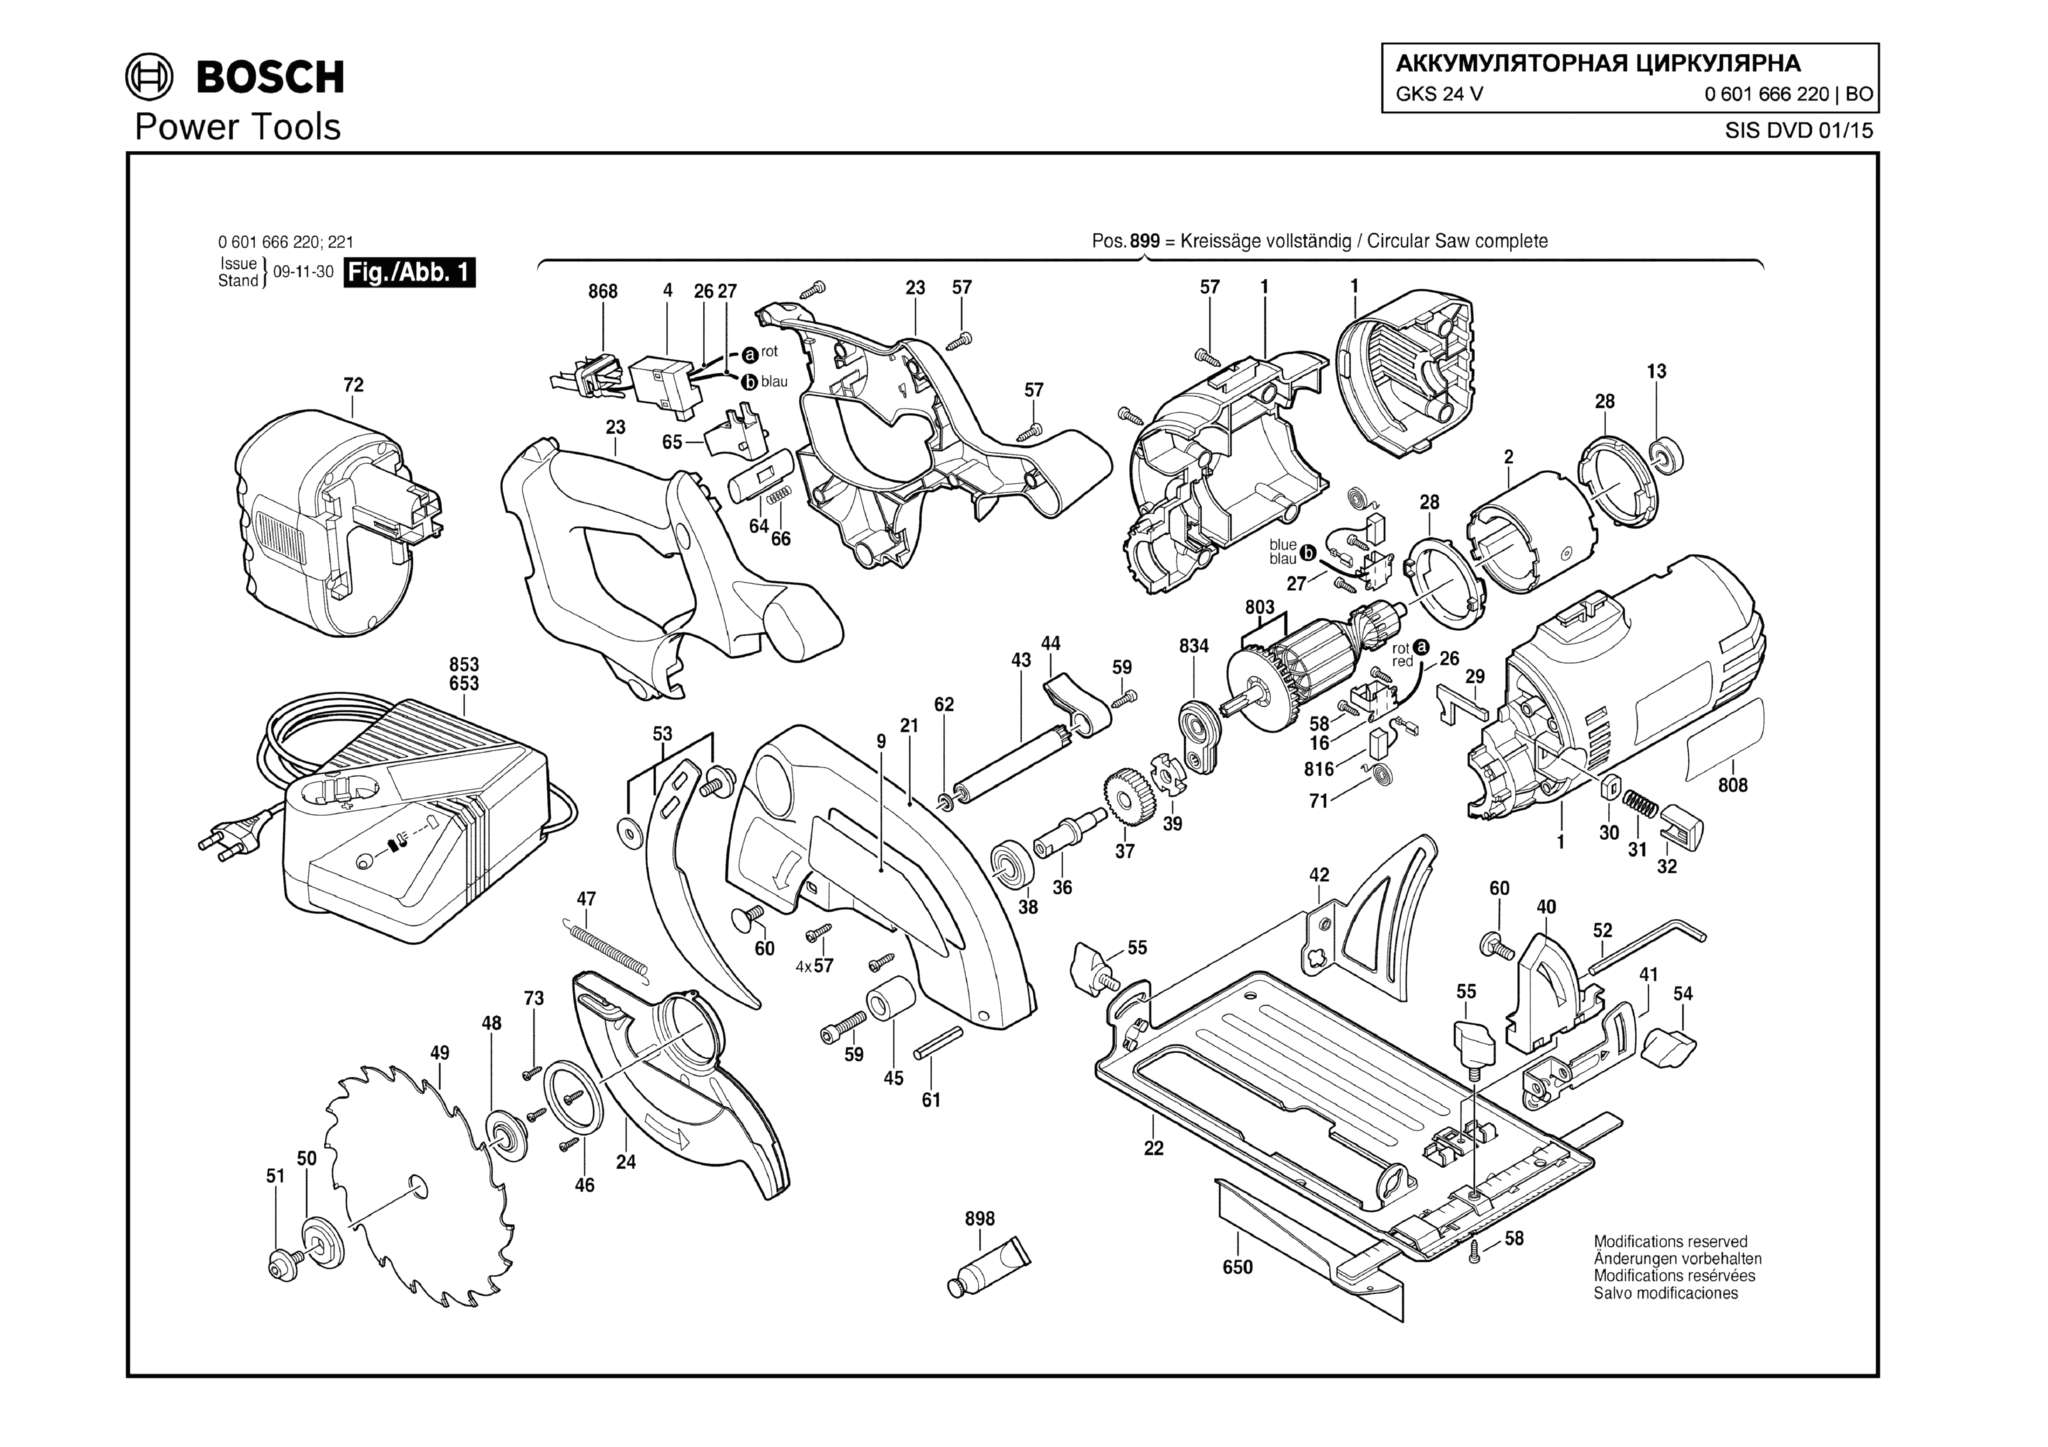 Запчасти, схема и деталировка Bosch GKS 24 V (ТИП 0601666220)